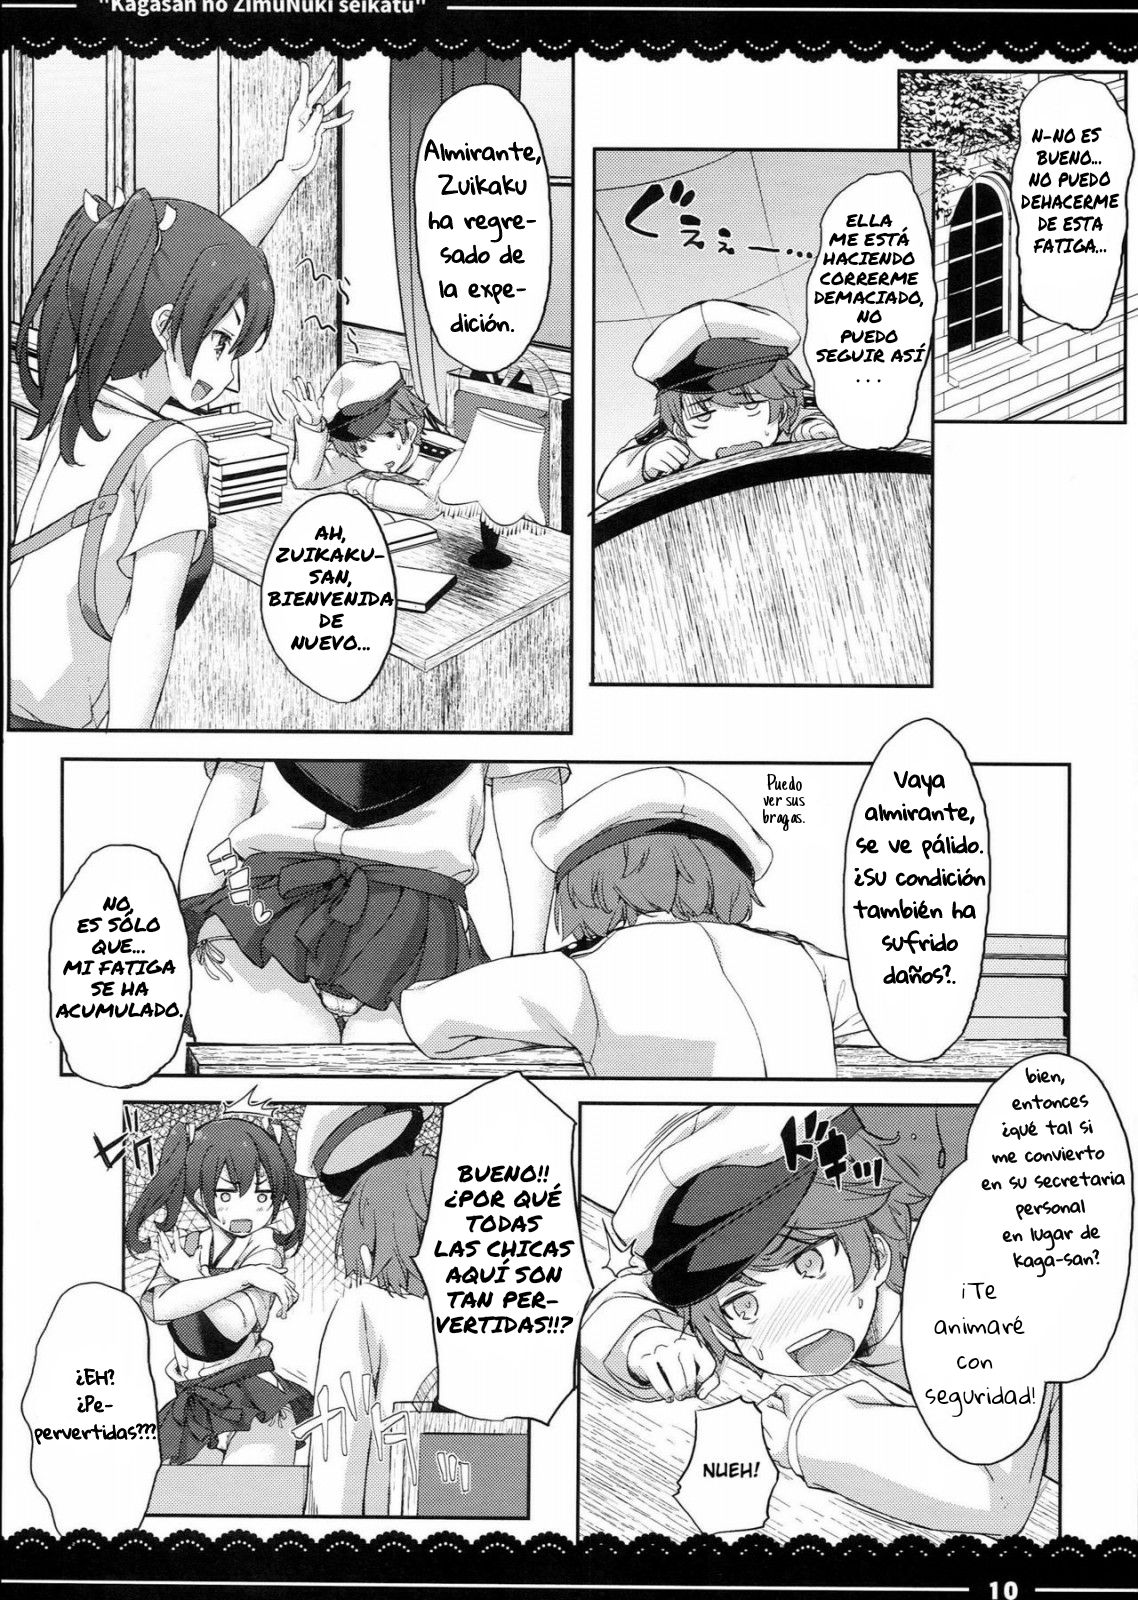 kaga-san's work skipping sex life-chapter 1 - 10